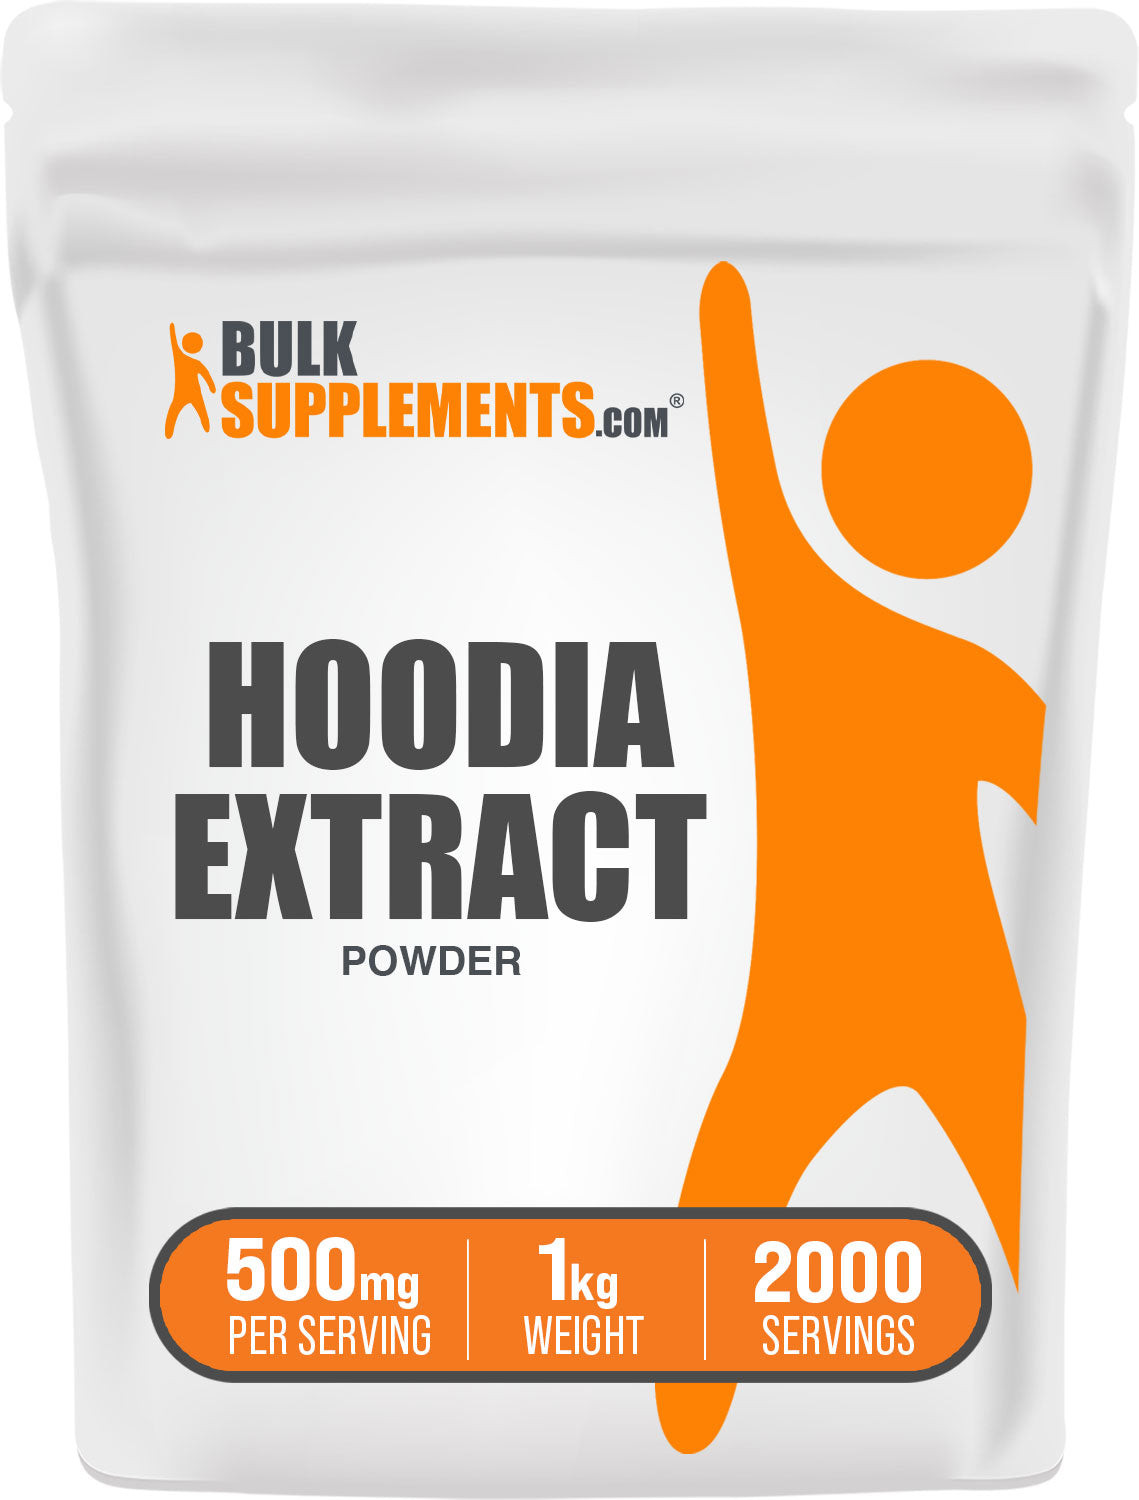 Hoodia Extract Powder 1kg